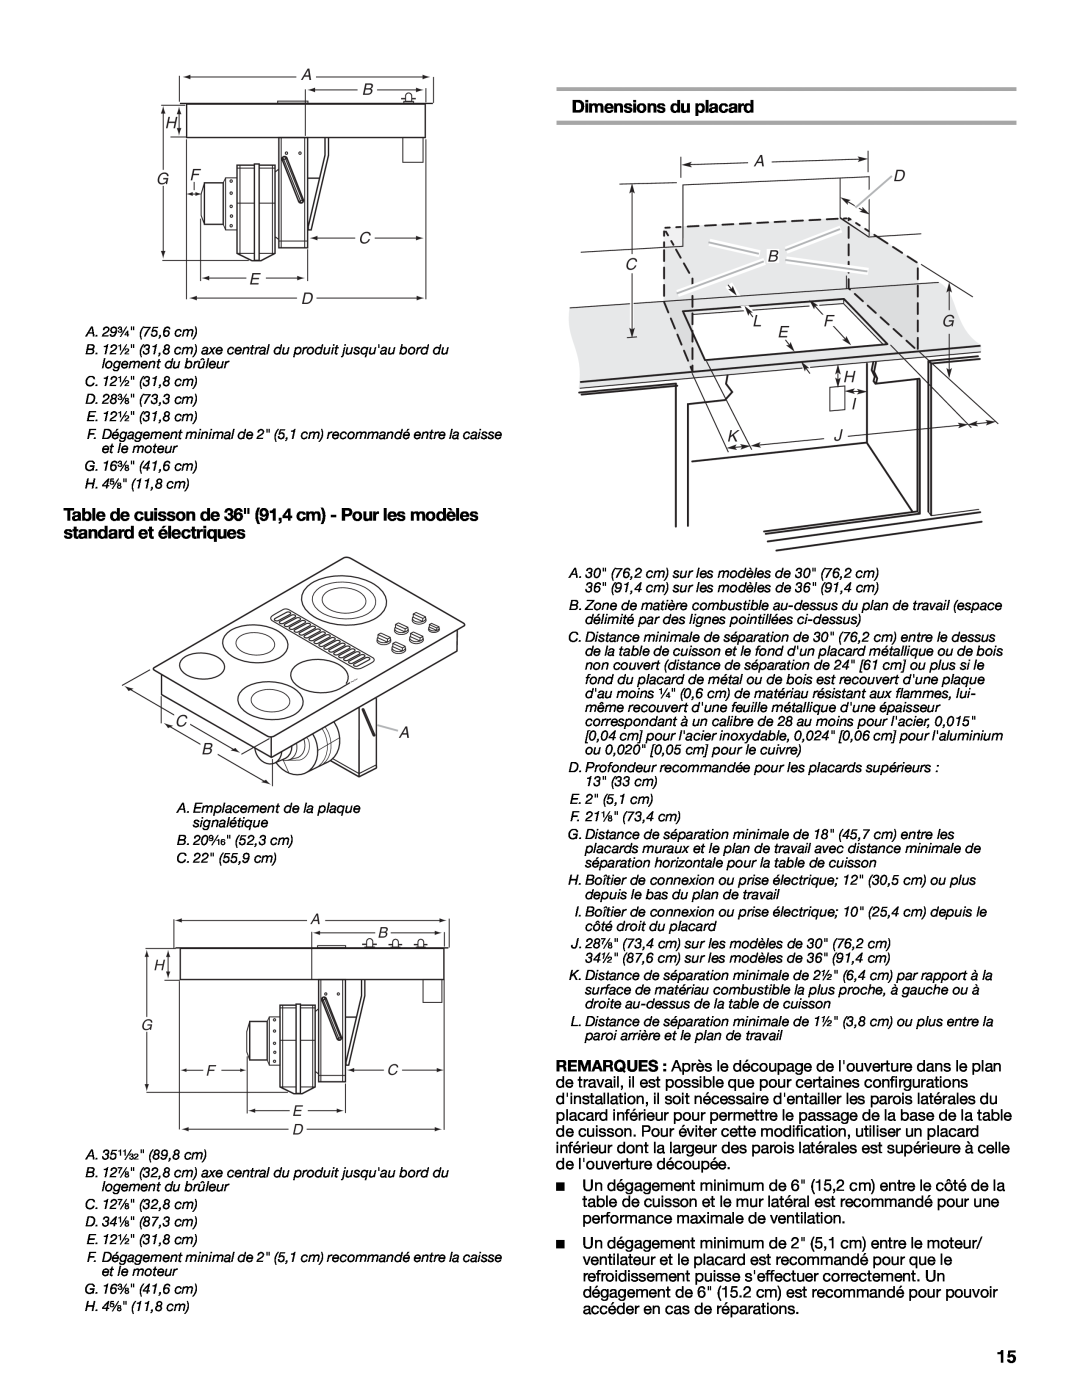 Jenn-Air W10197059B installation instructions Dimensions du placard, A D Cb L Fg E H I Kj, C A B 